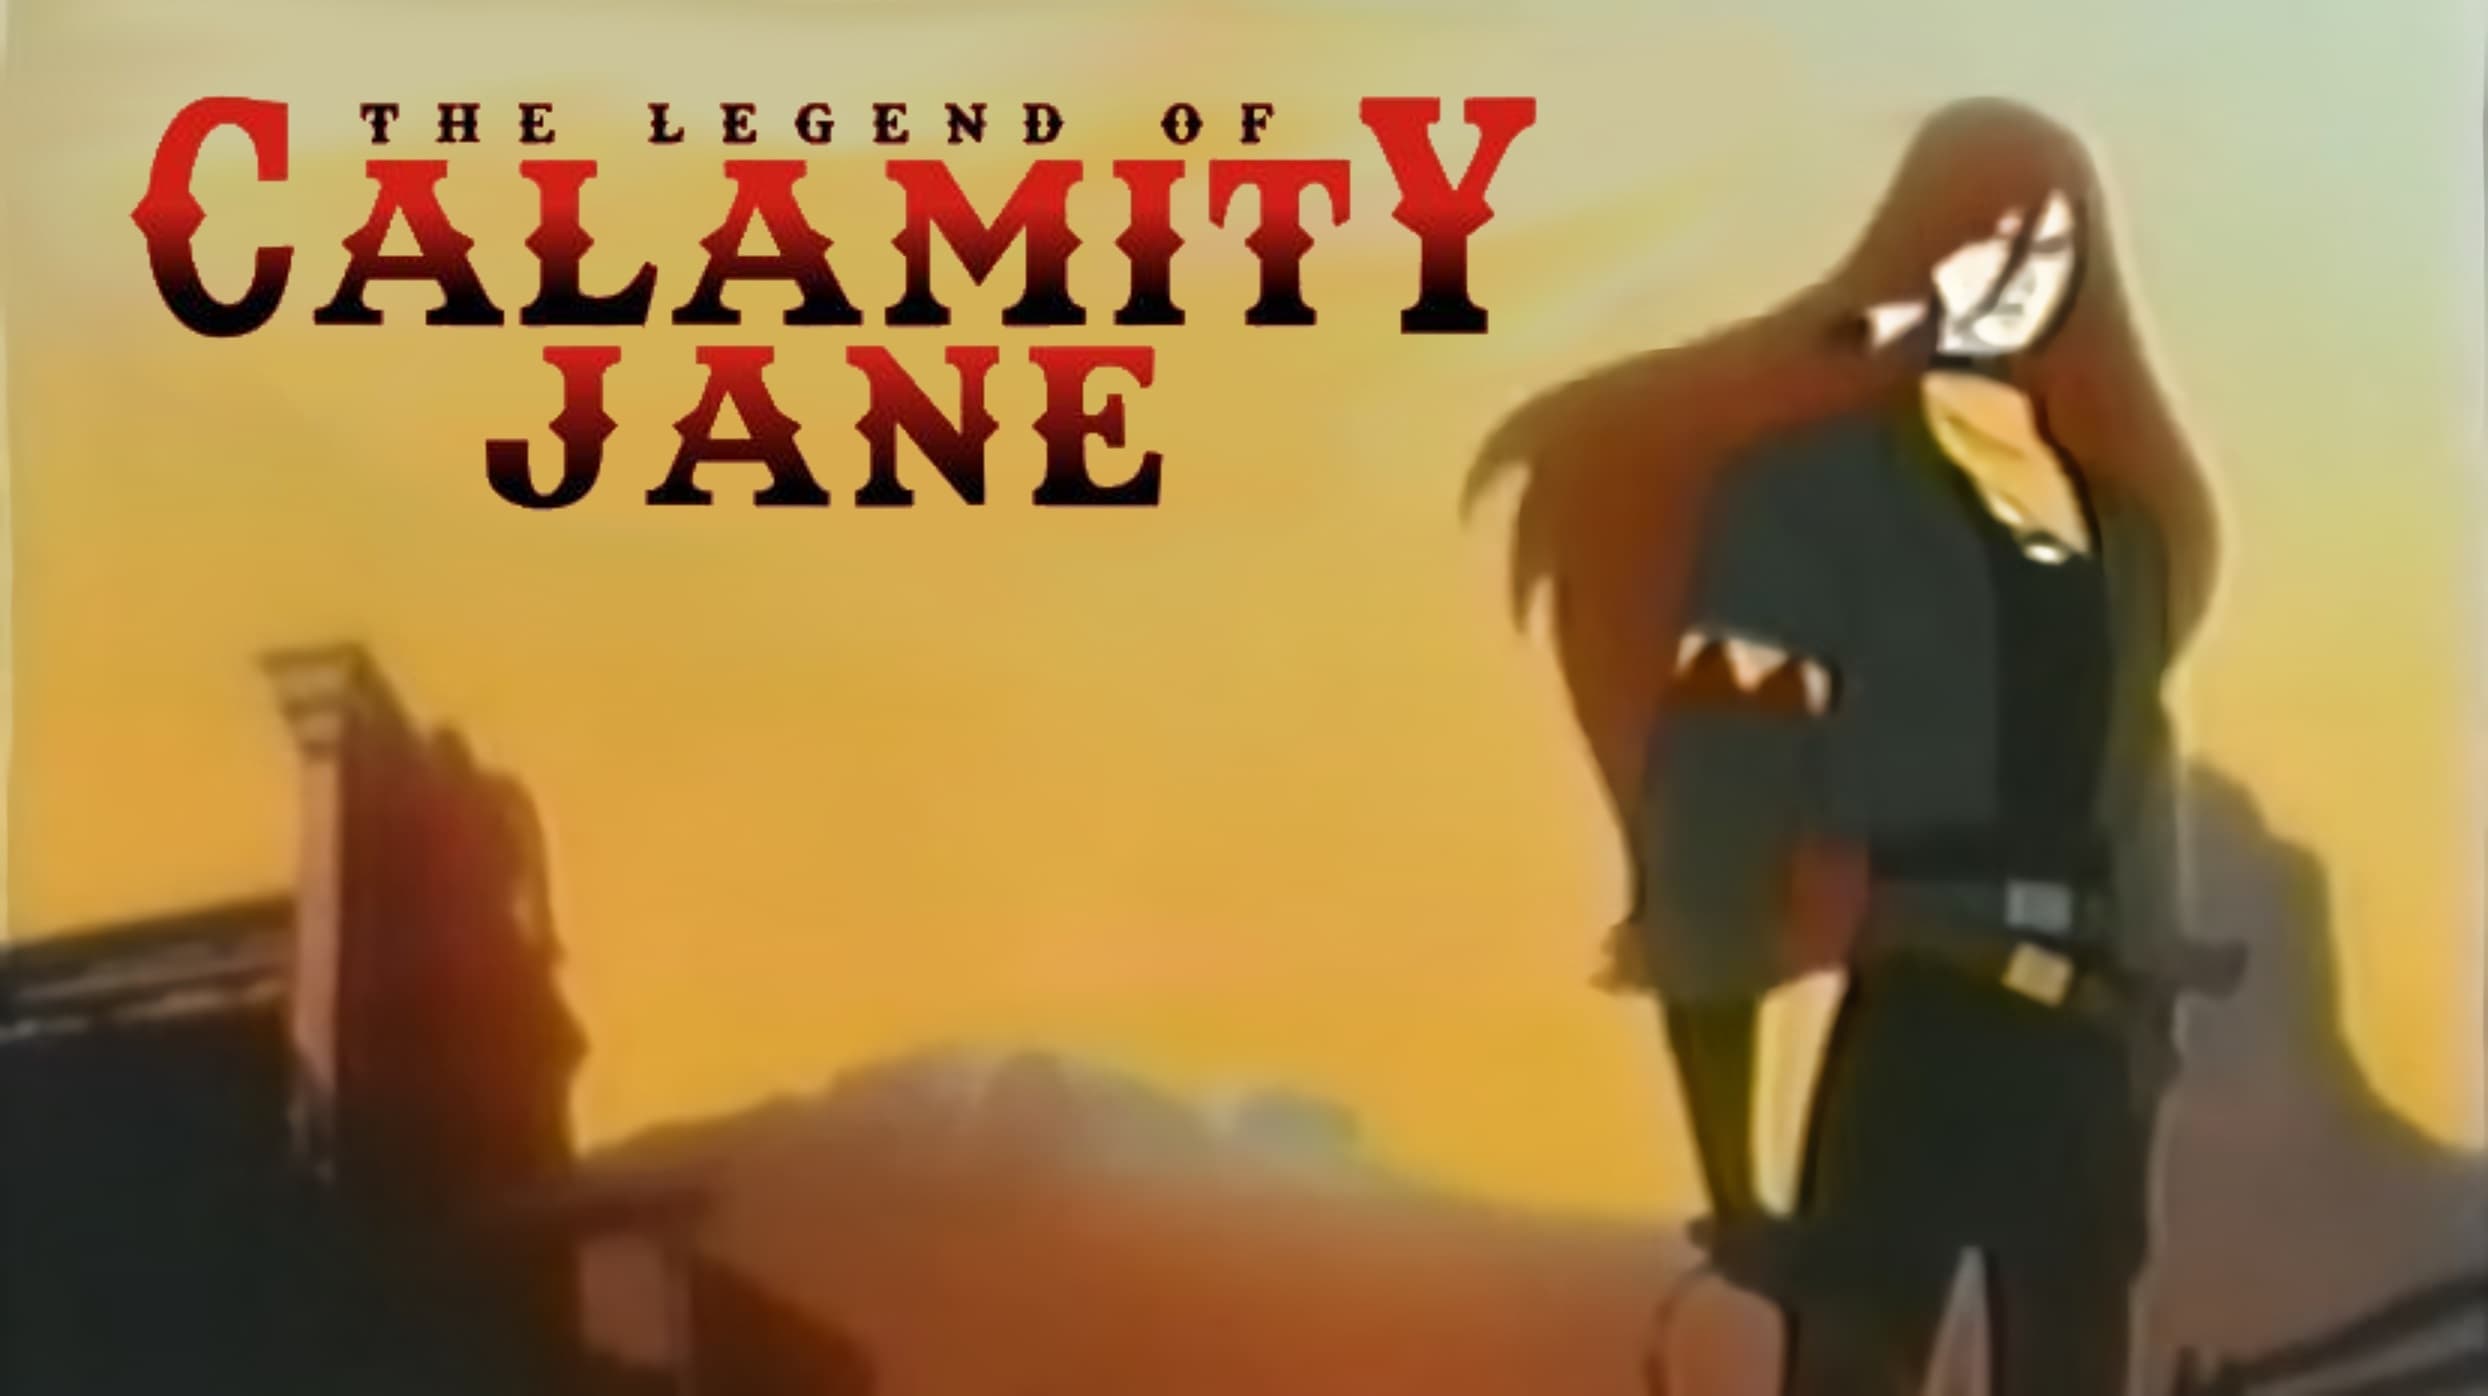 Calamity Jane, la leggenda del West